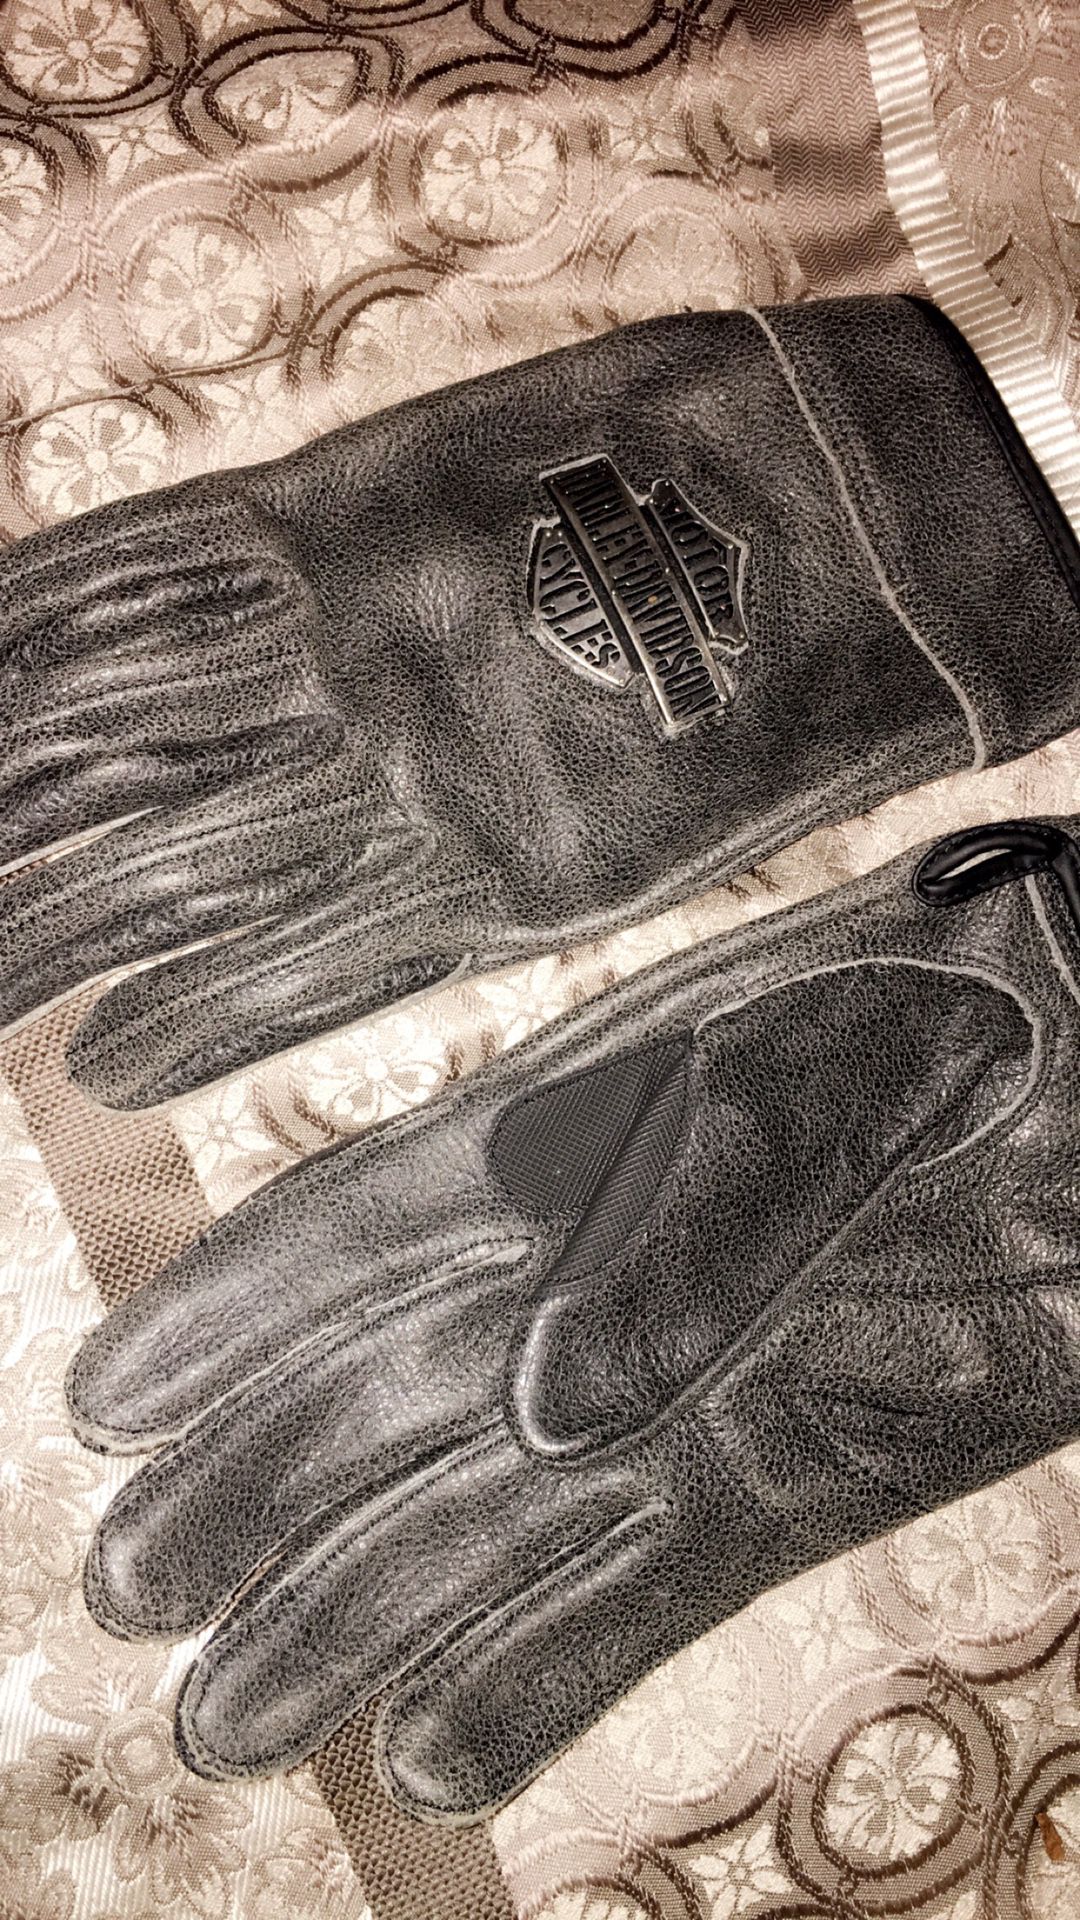 Harley Davidson Motorcycle Gloves L